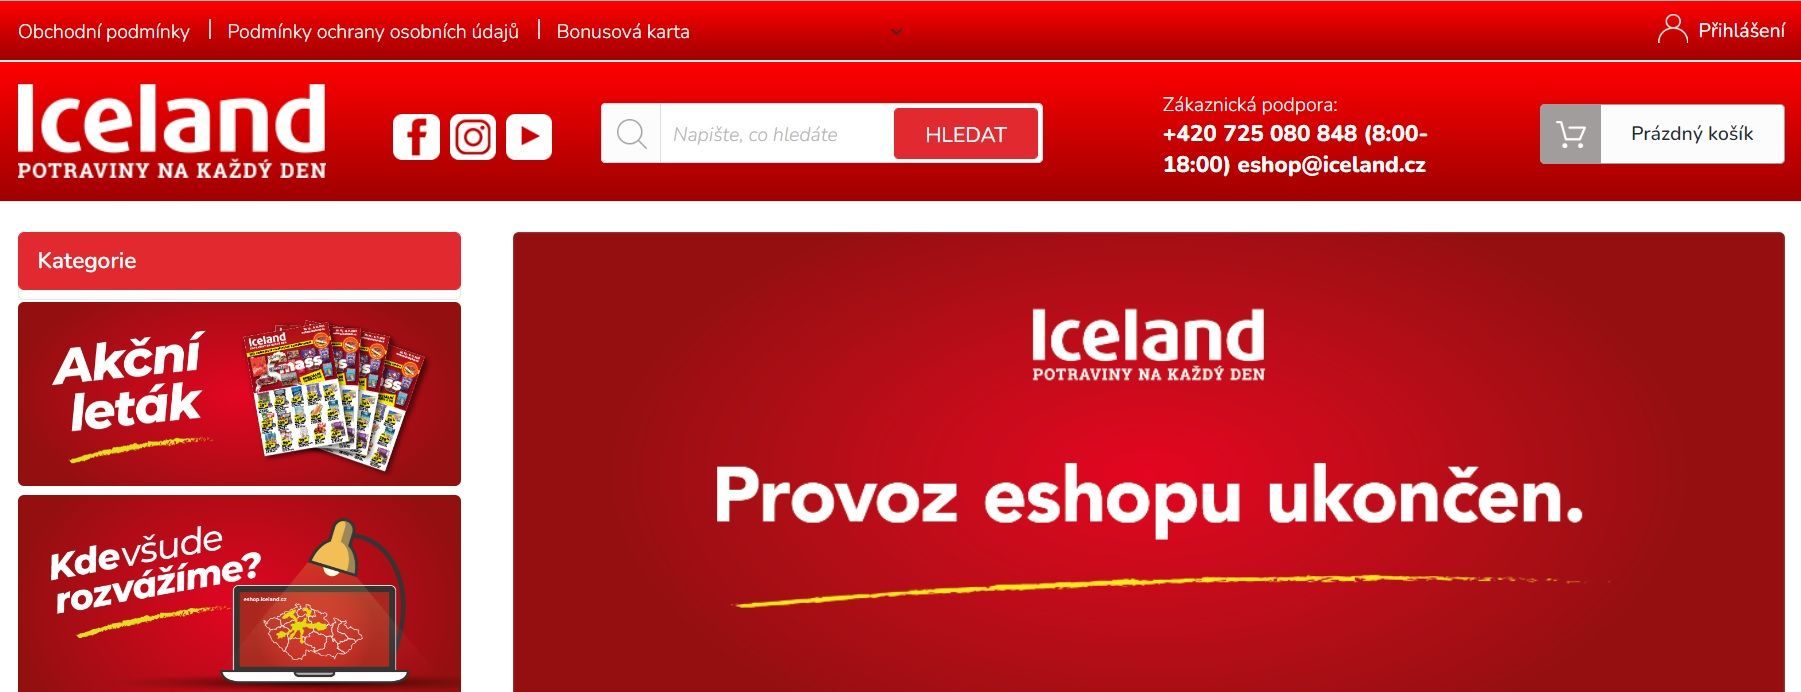 iceland e-shop